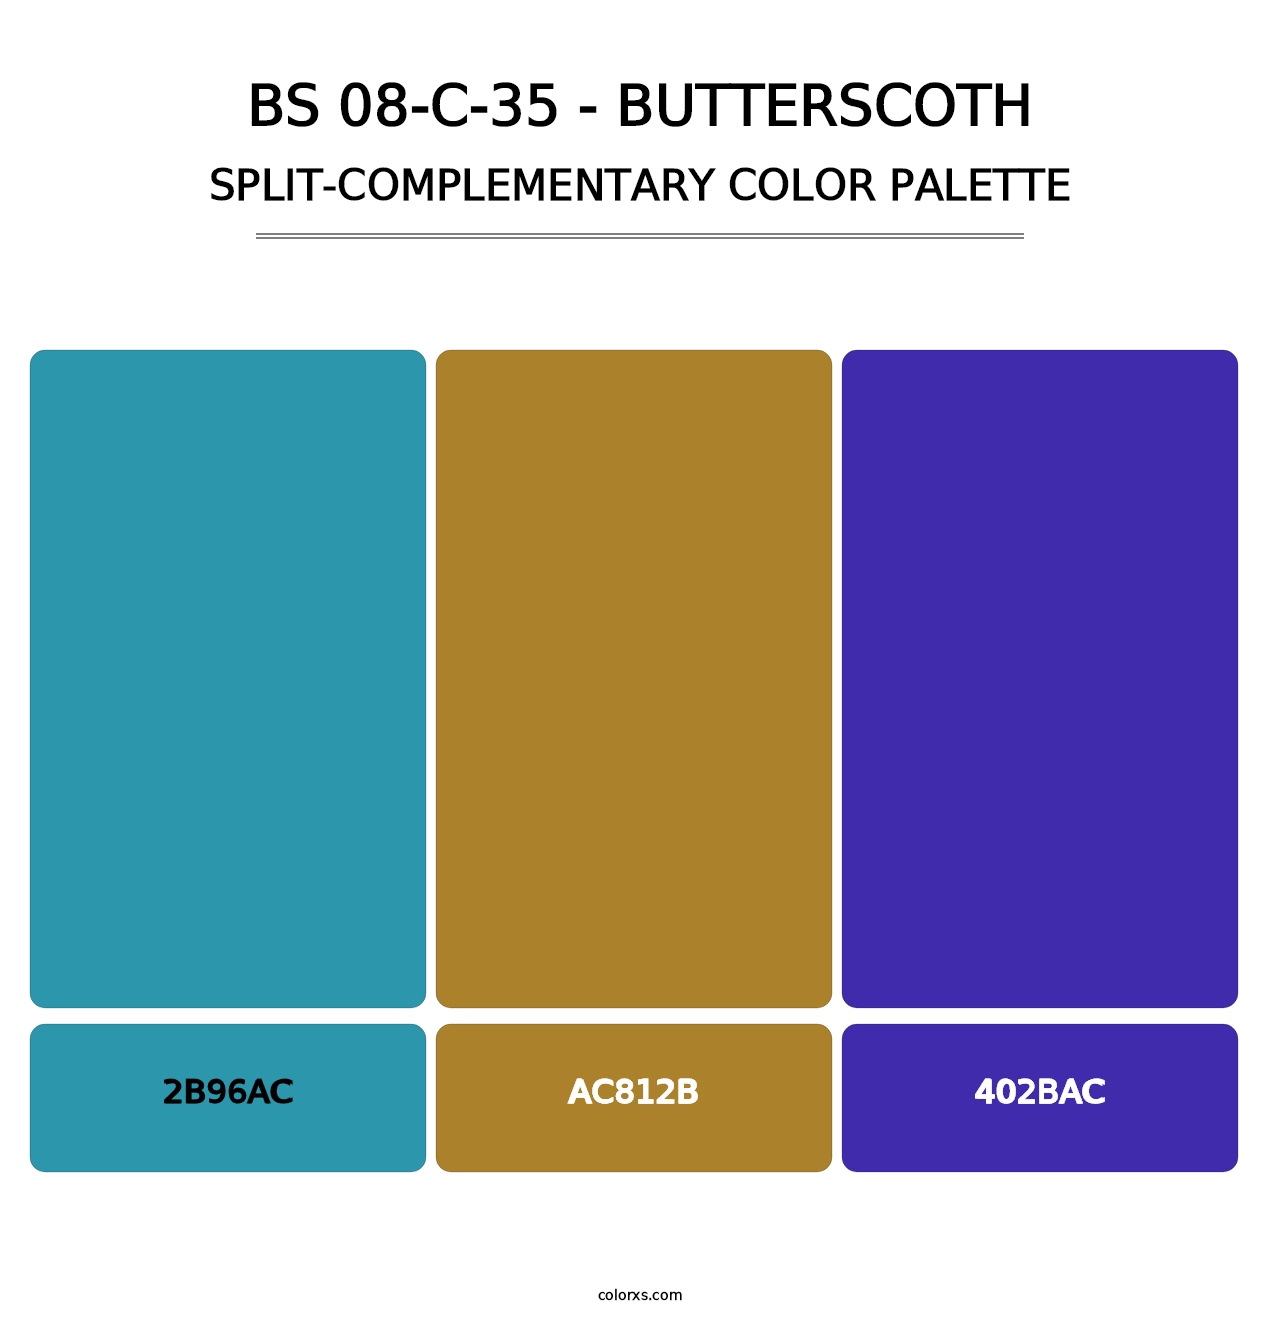 BS 08-C-35 - Butterscoth - Split-Complementary Color Palette